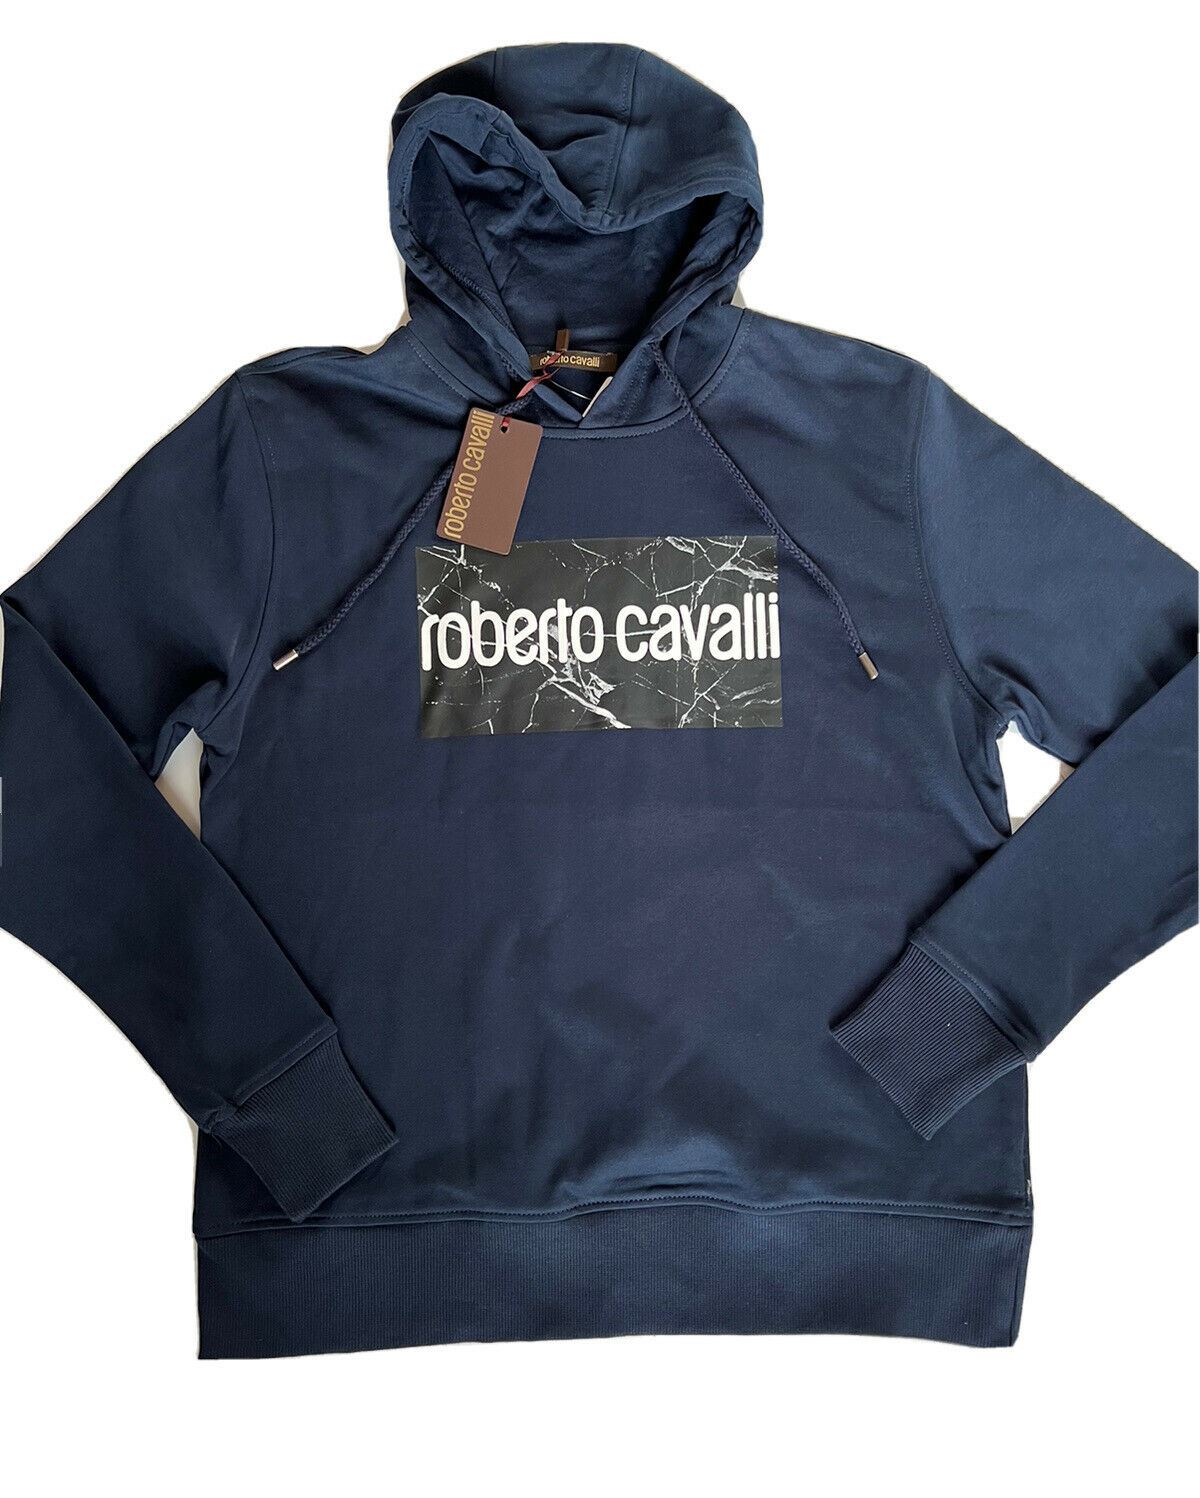 NWT $495 Roberto Cavalli Men's Navy Hoodie Sweater Small